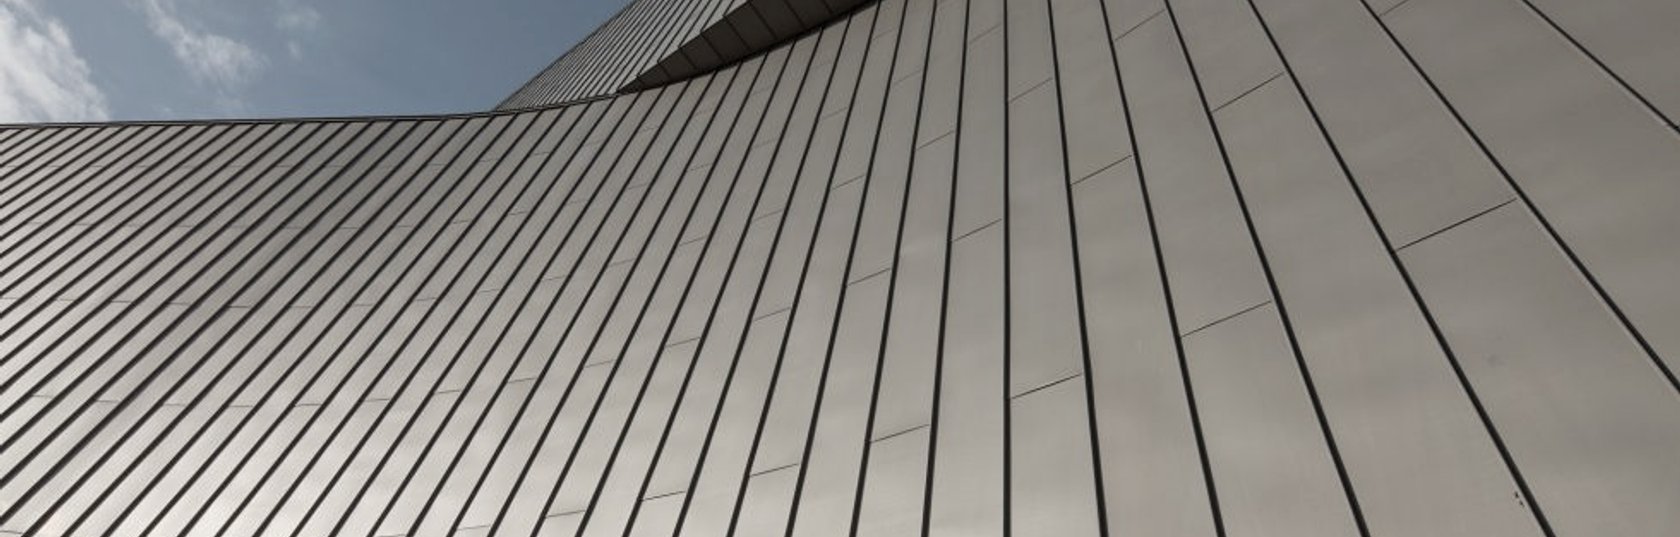 Construction Complete On Deakin University 3D Curving Façade Cladding